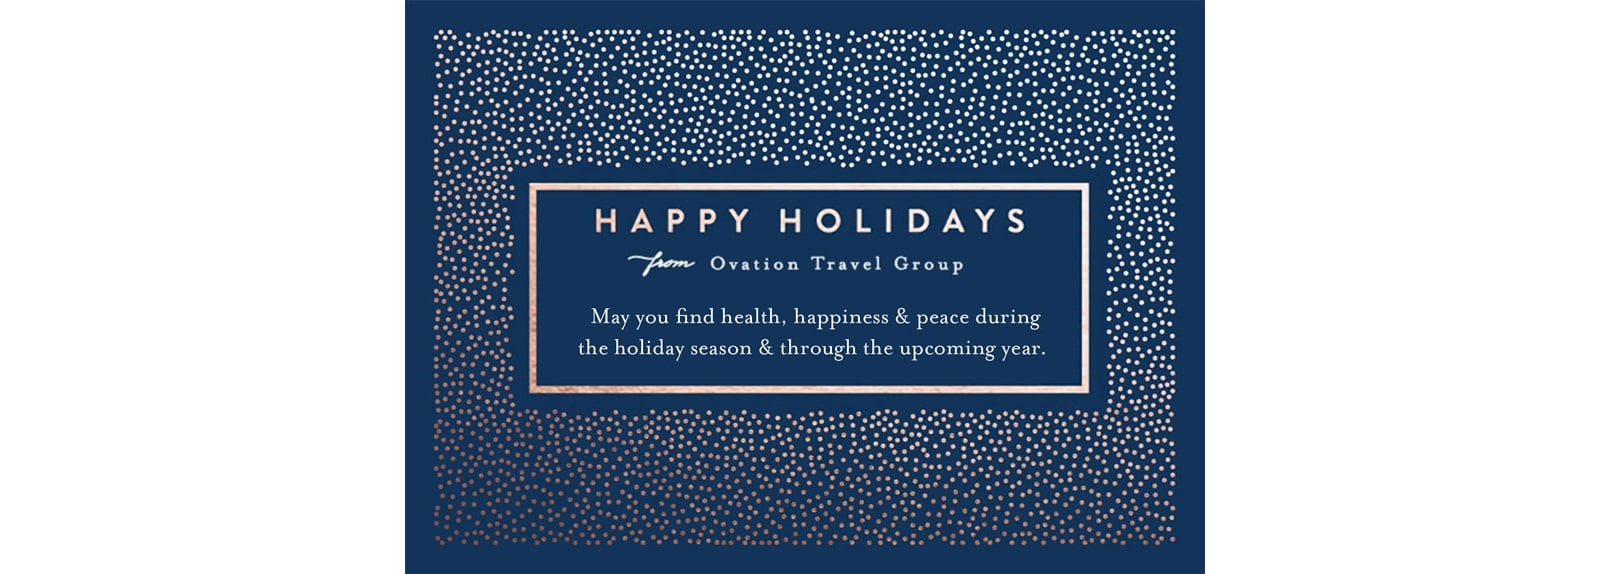 Ovation-Holiday-Card-Blog.jpg